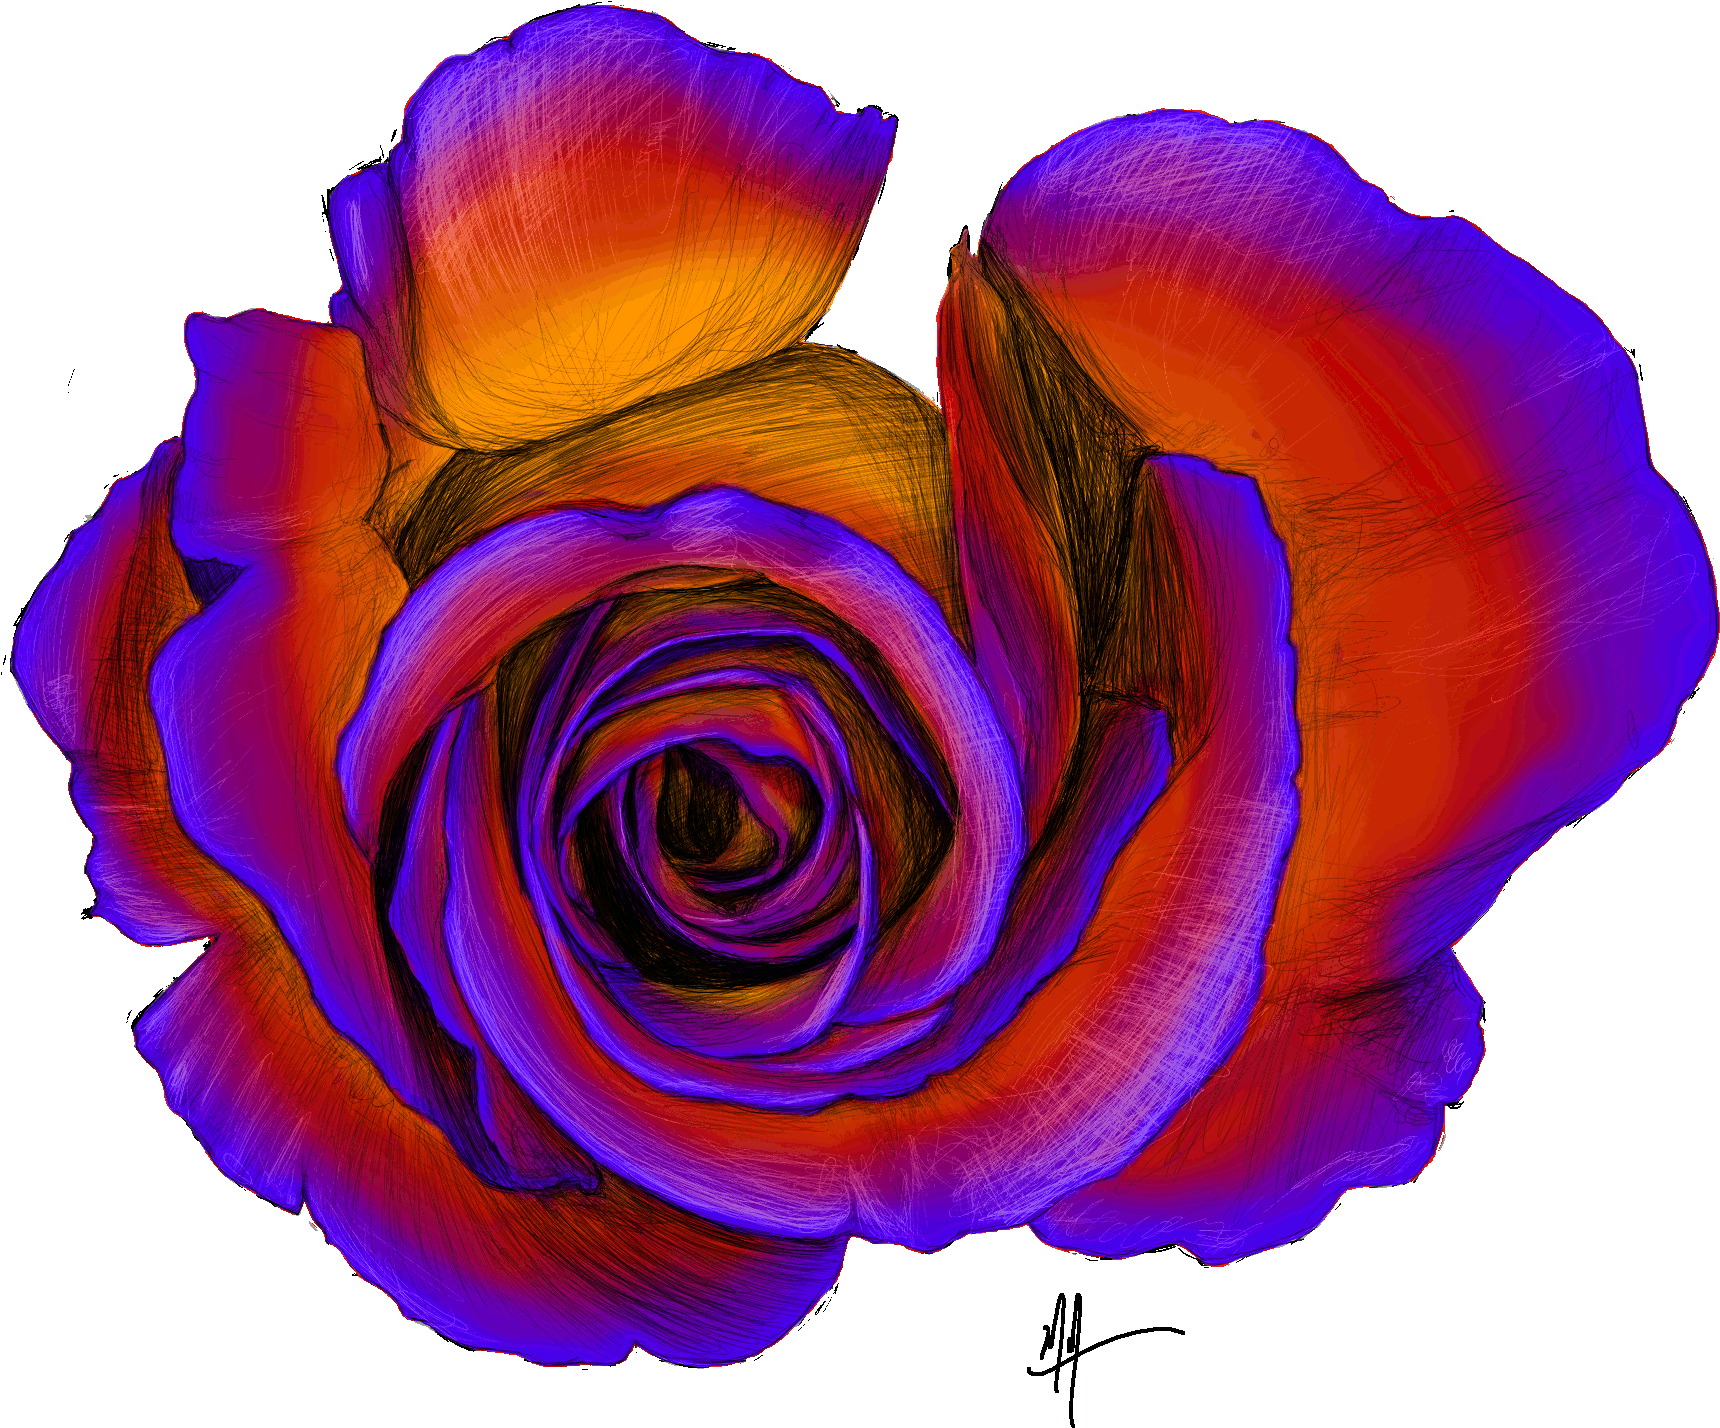 Rose Overhead Sketch Colour - Sketch (2158x1714)